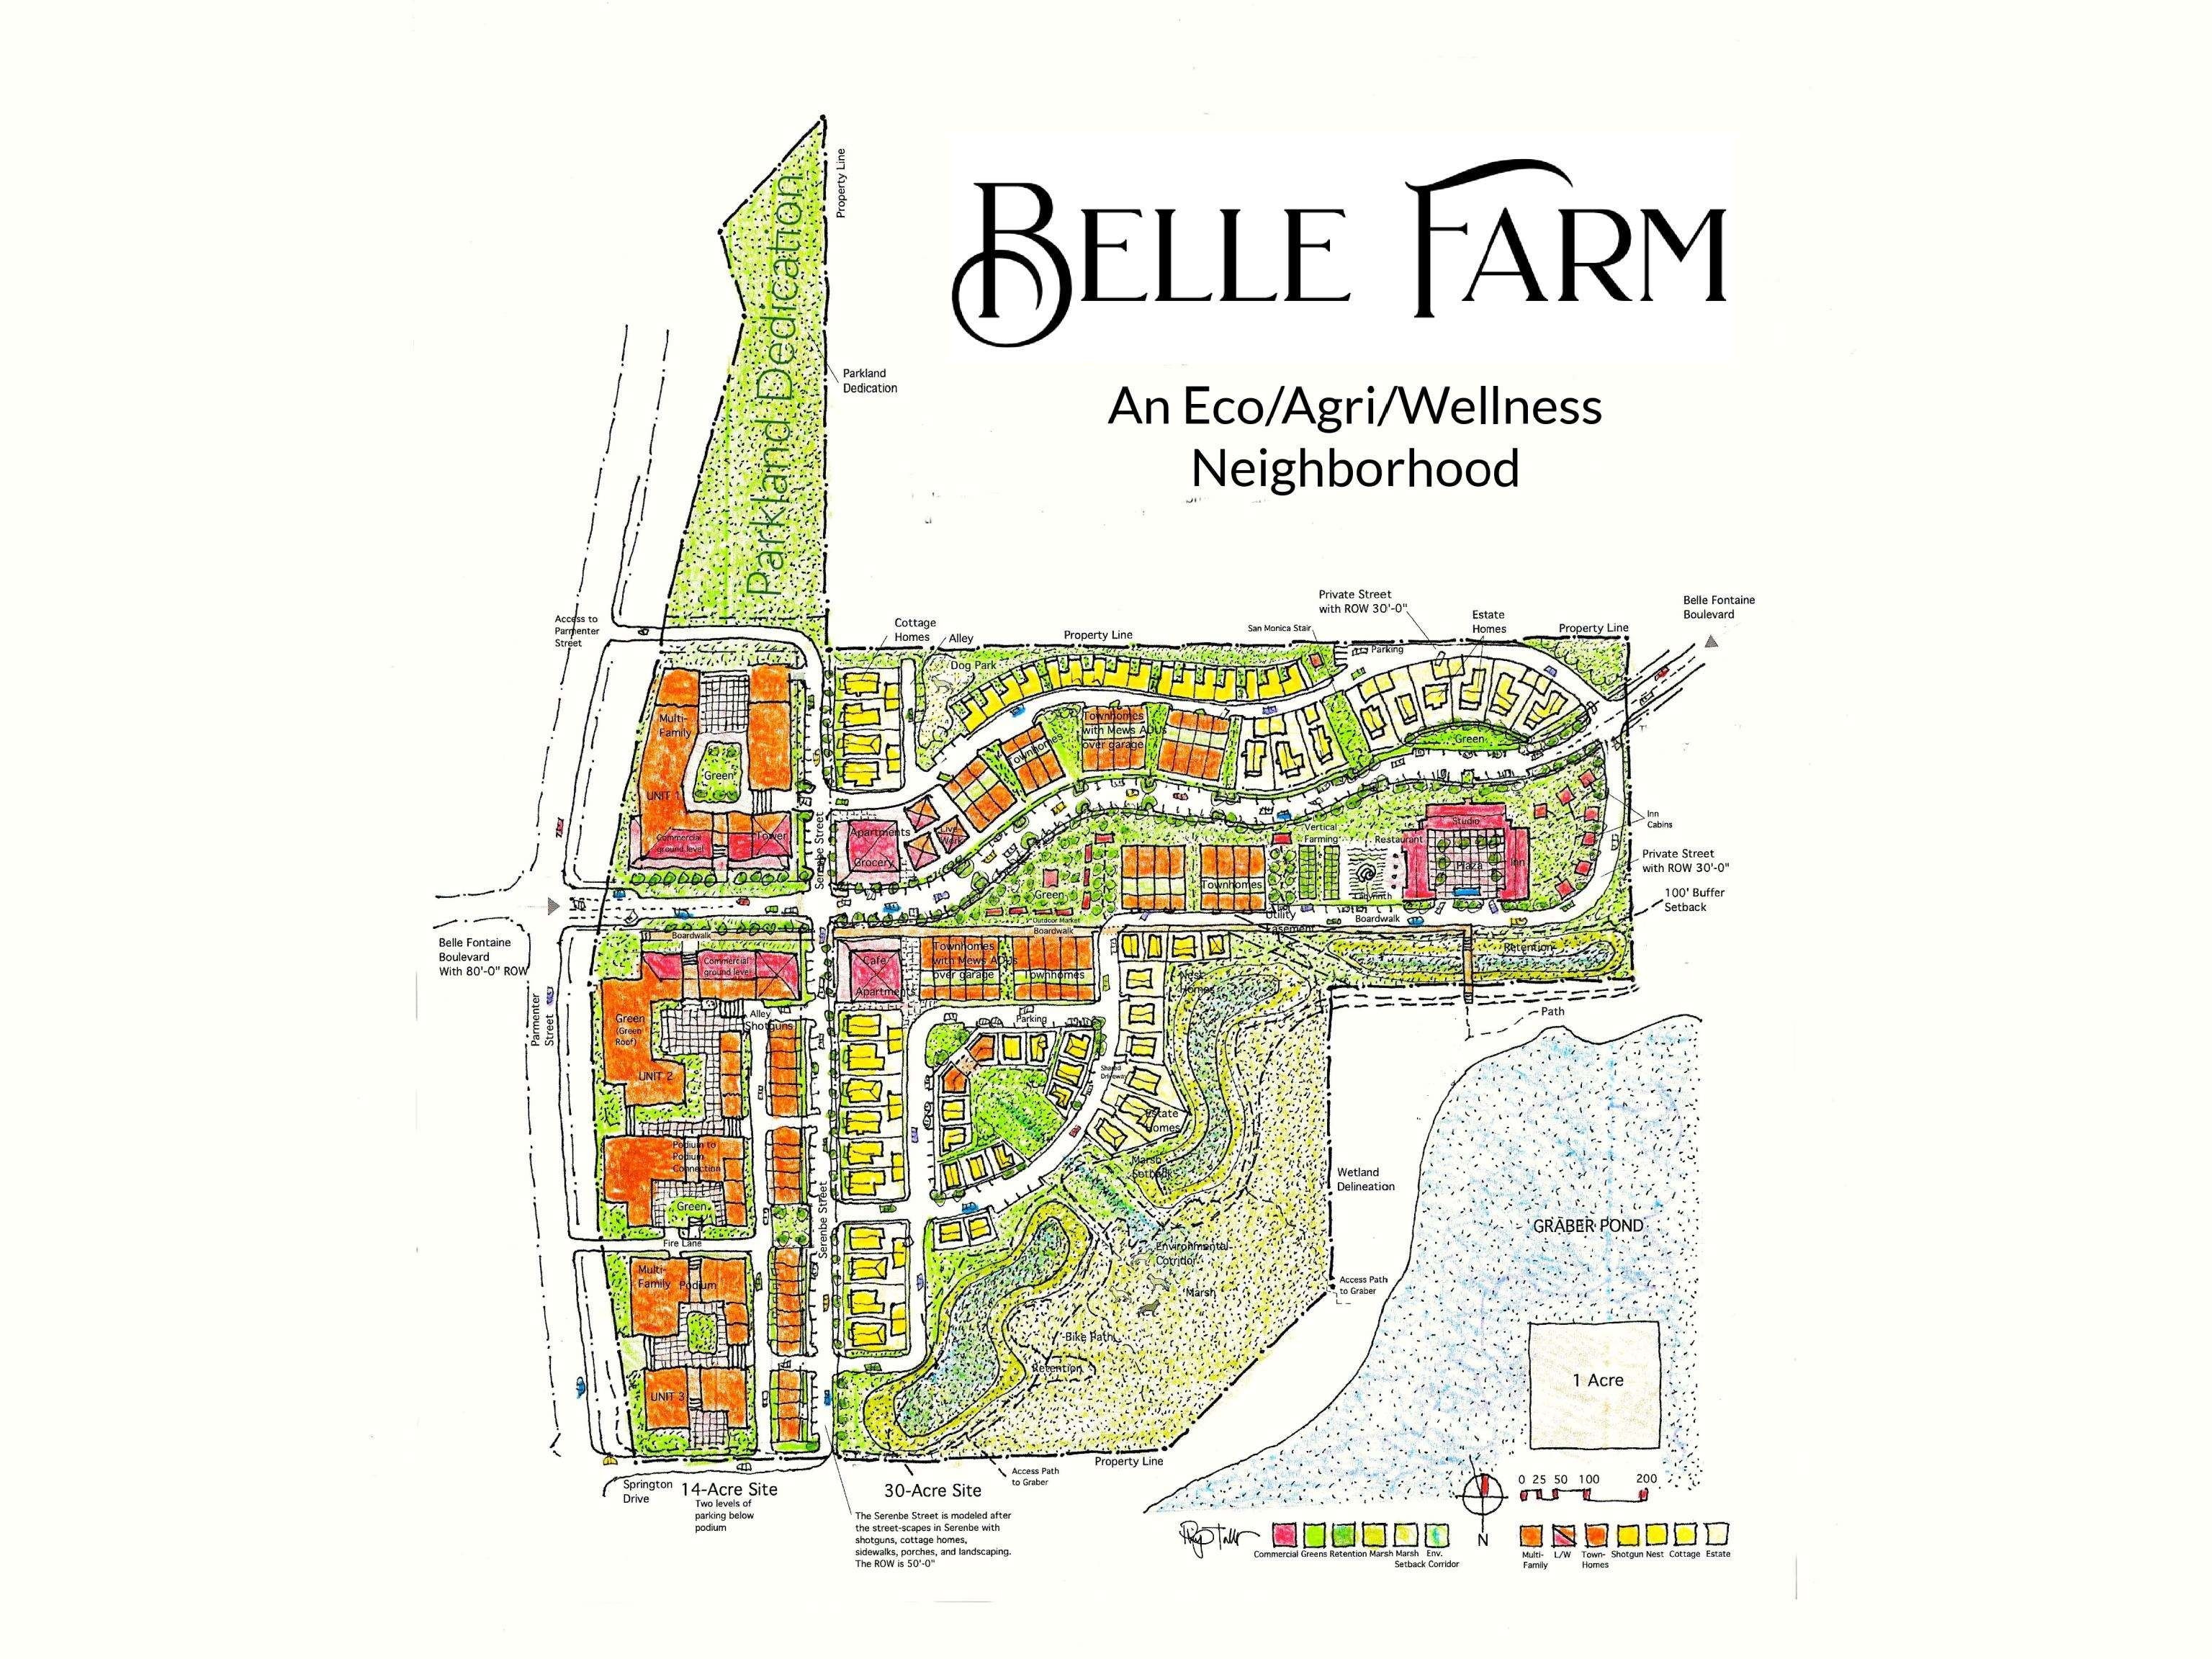 2. Lot 31 Belle Farm